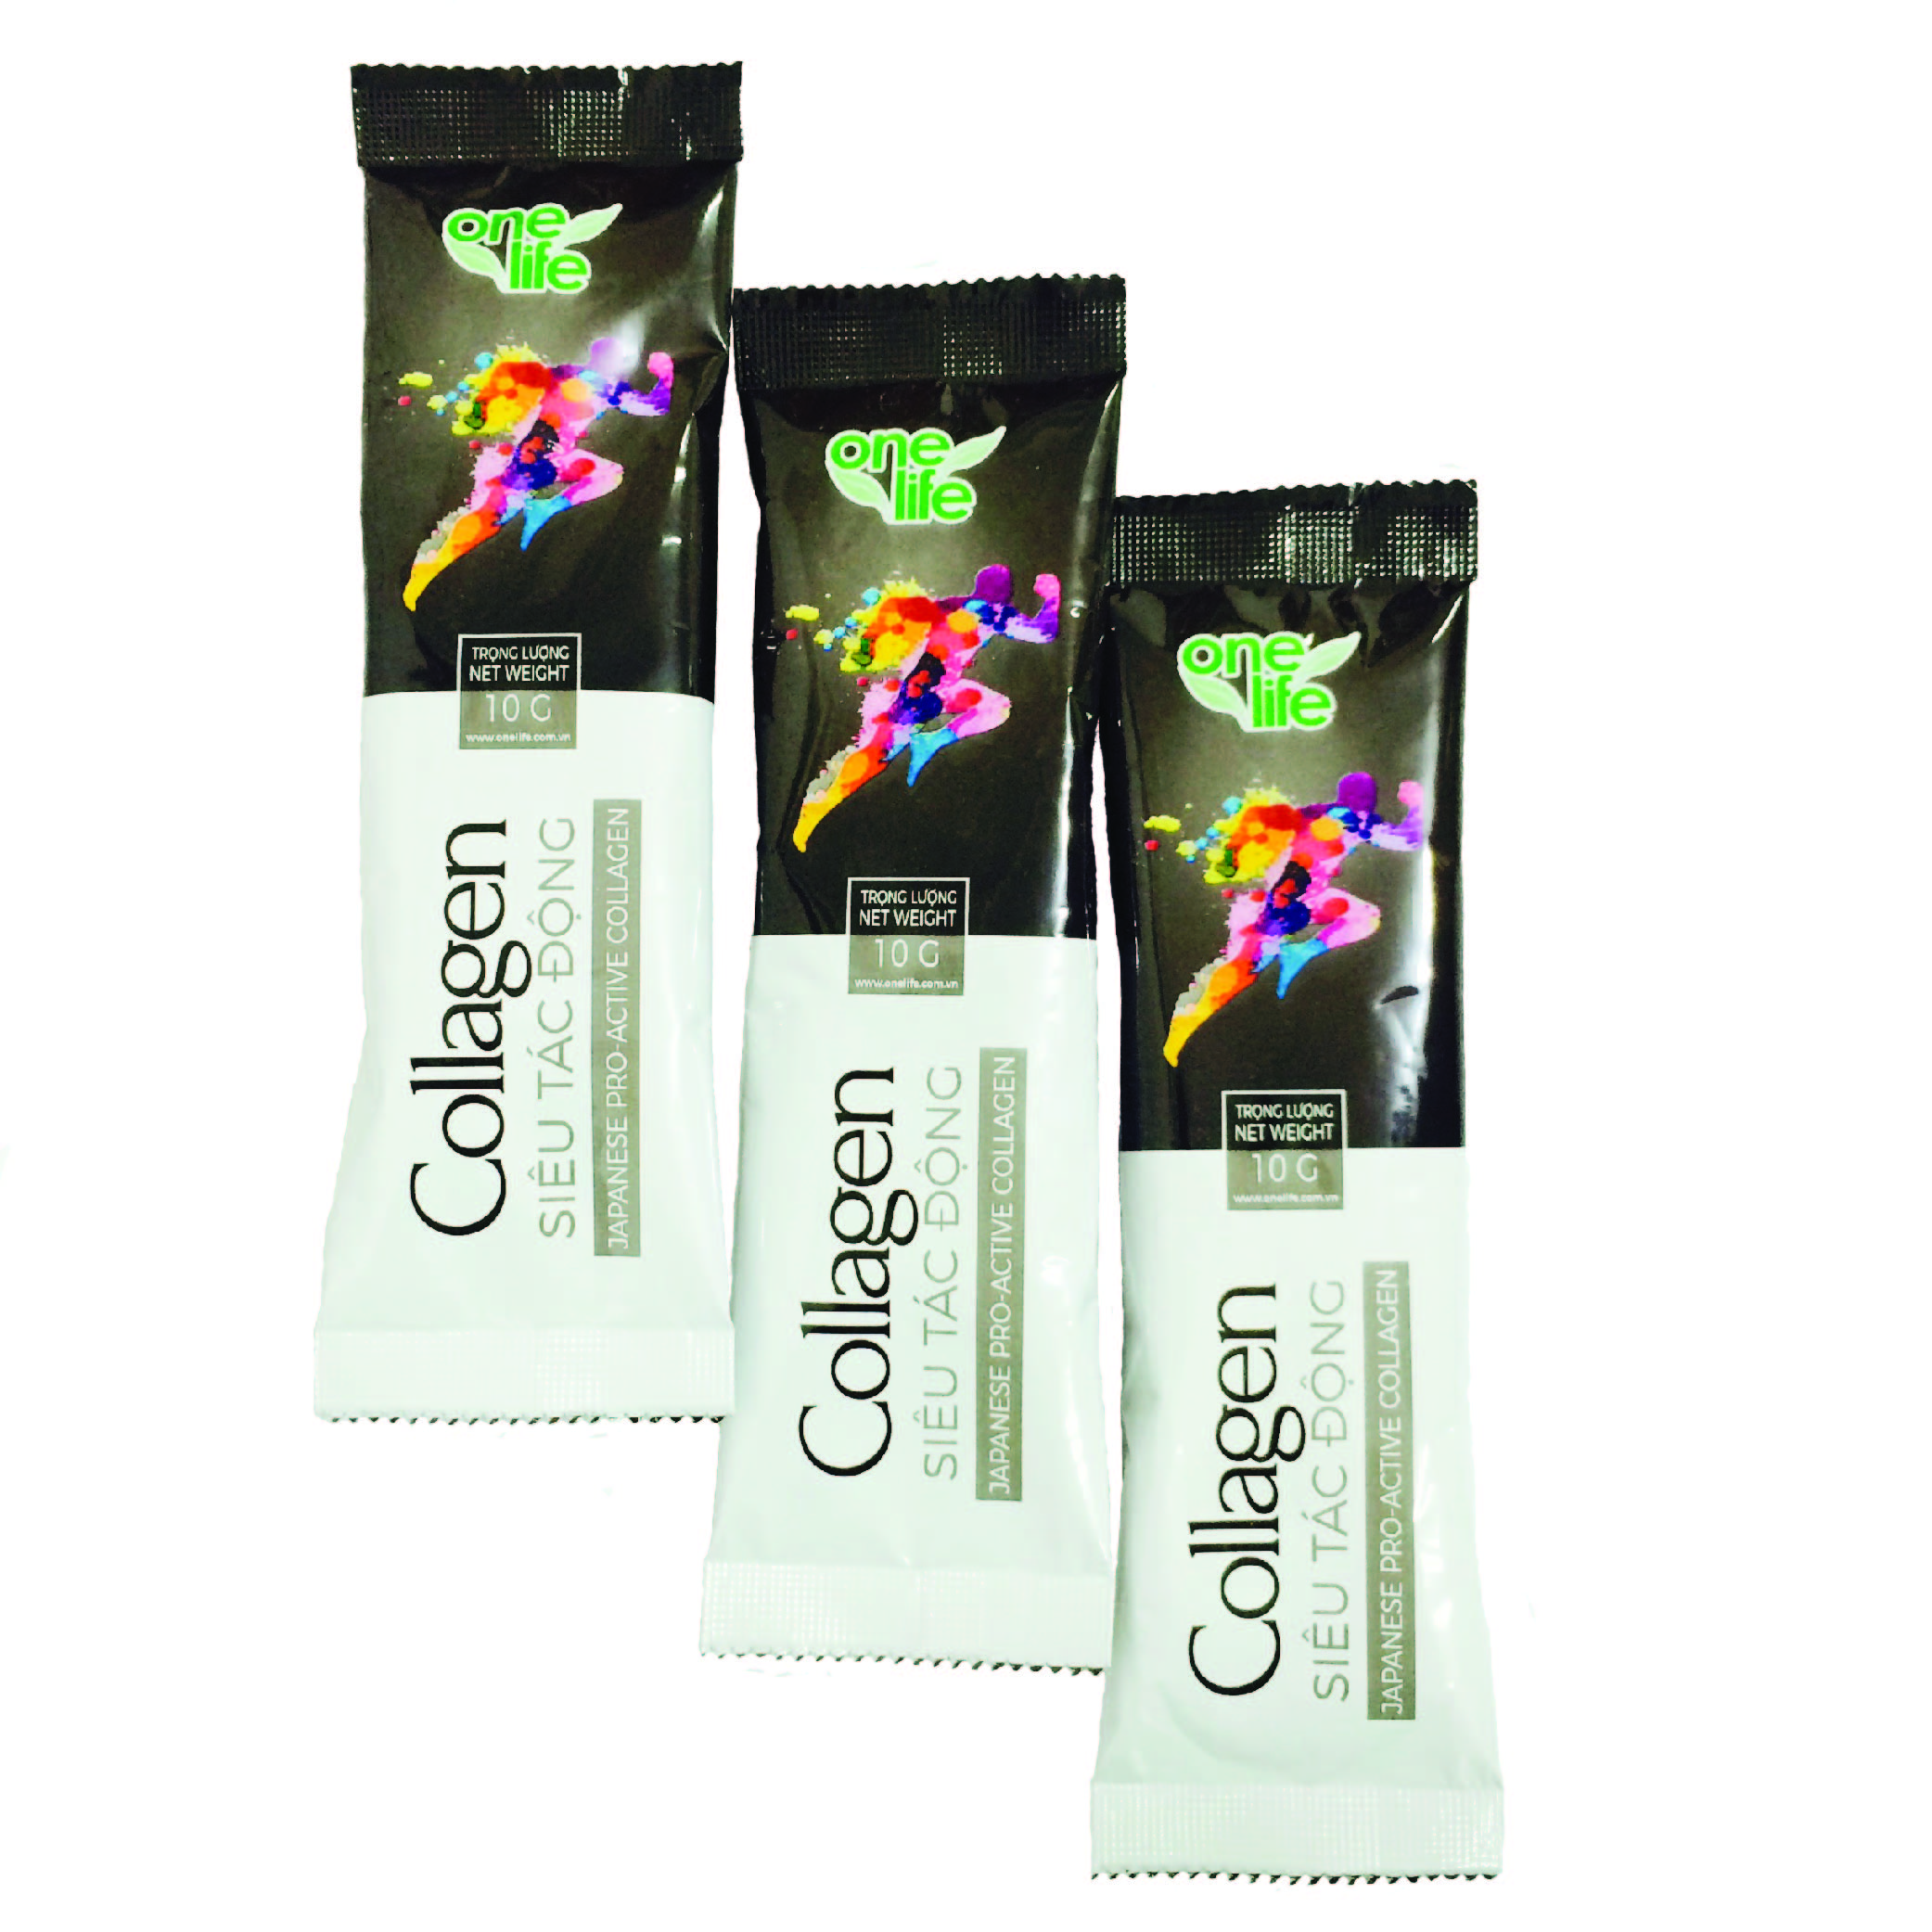 Thực phẩm Bổ sung Collagen Pro-Active OneLife (100% Bột Collagen Cá Nhật Bản) – Hộp 7 gói